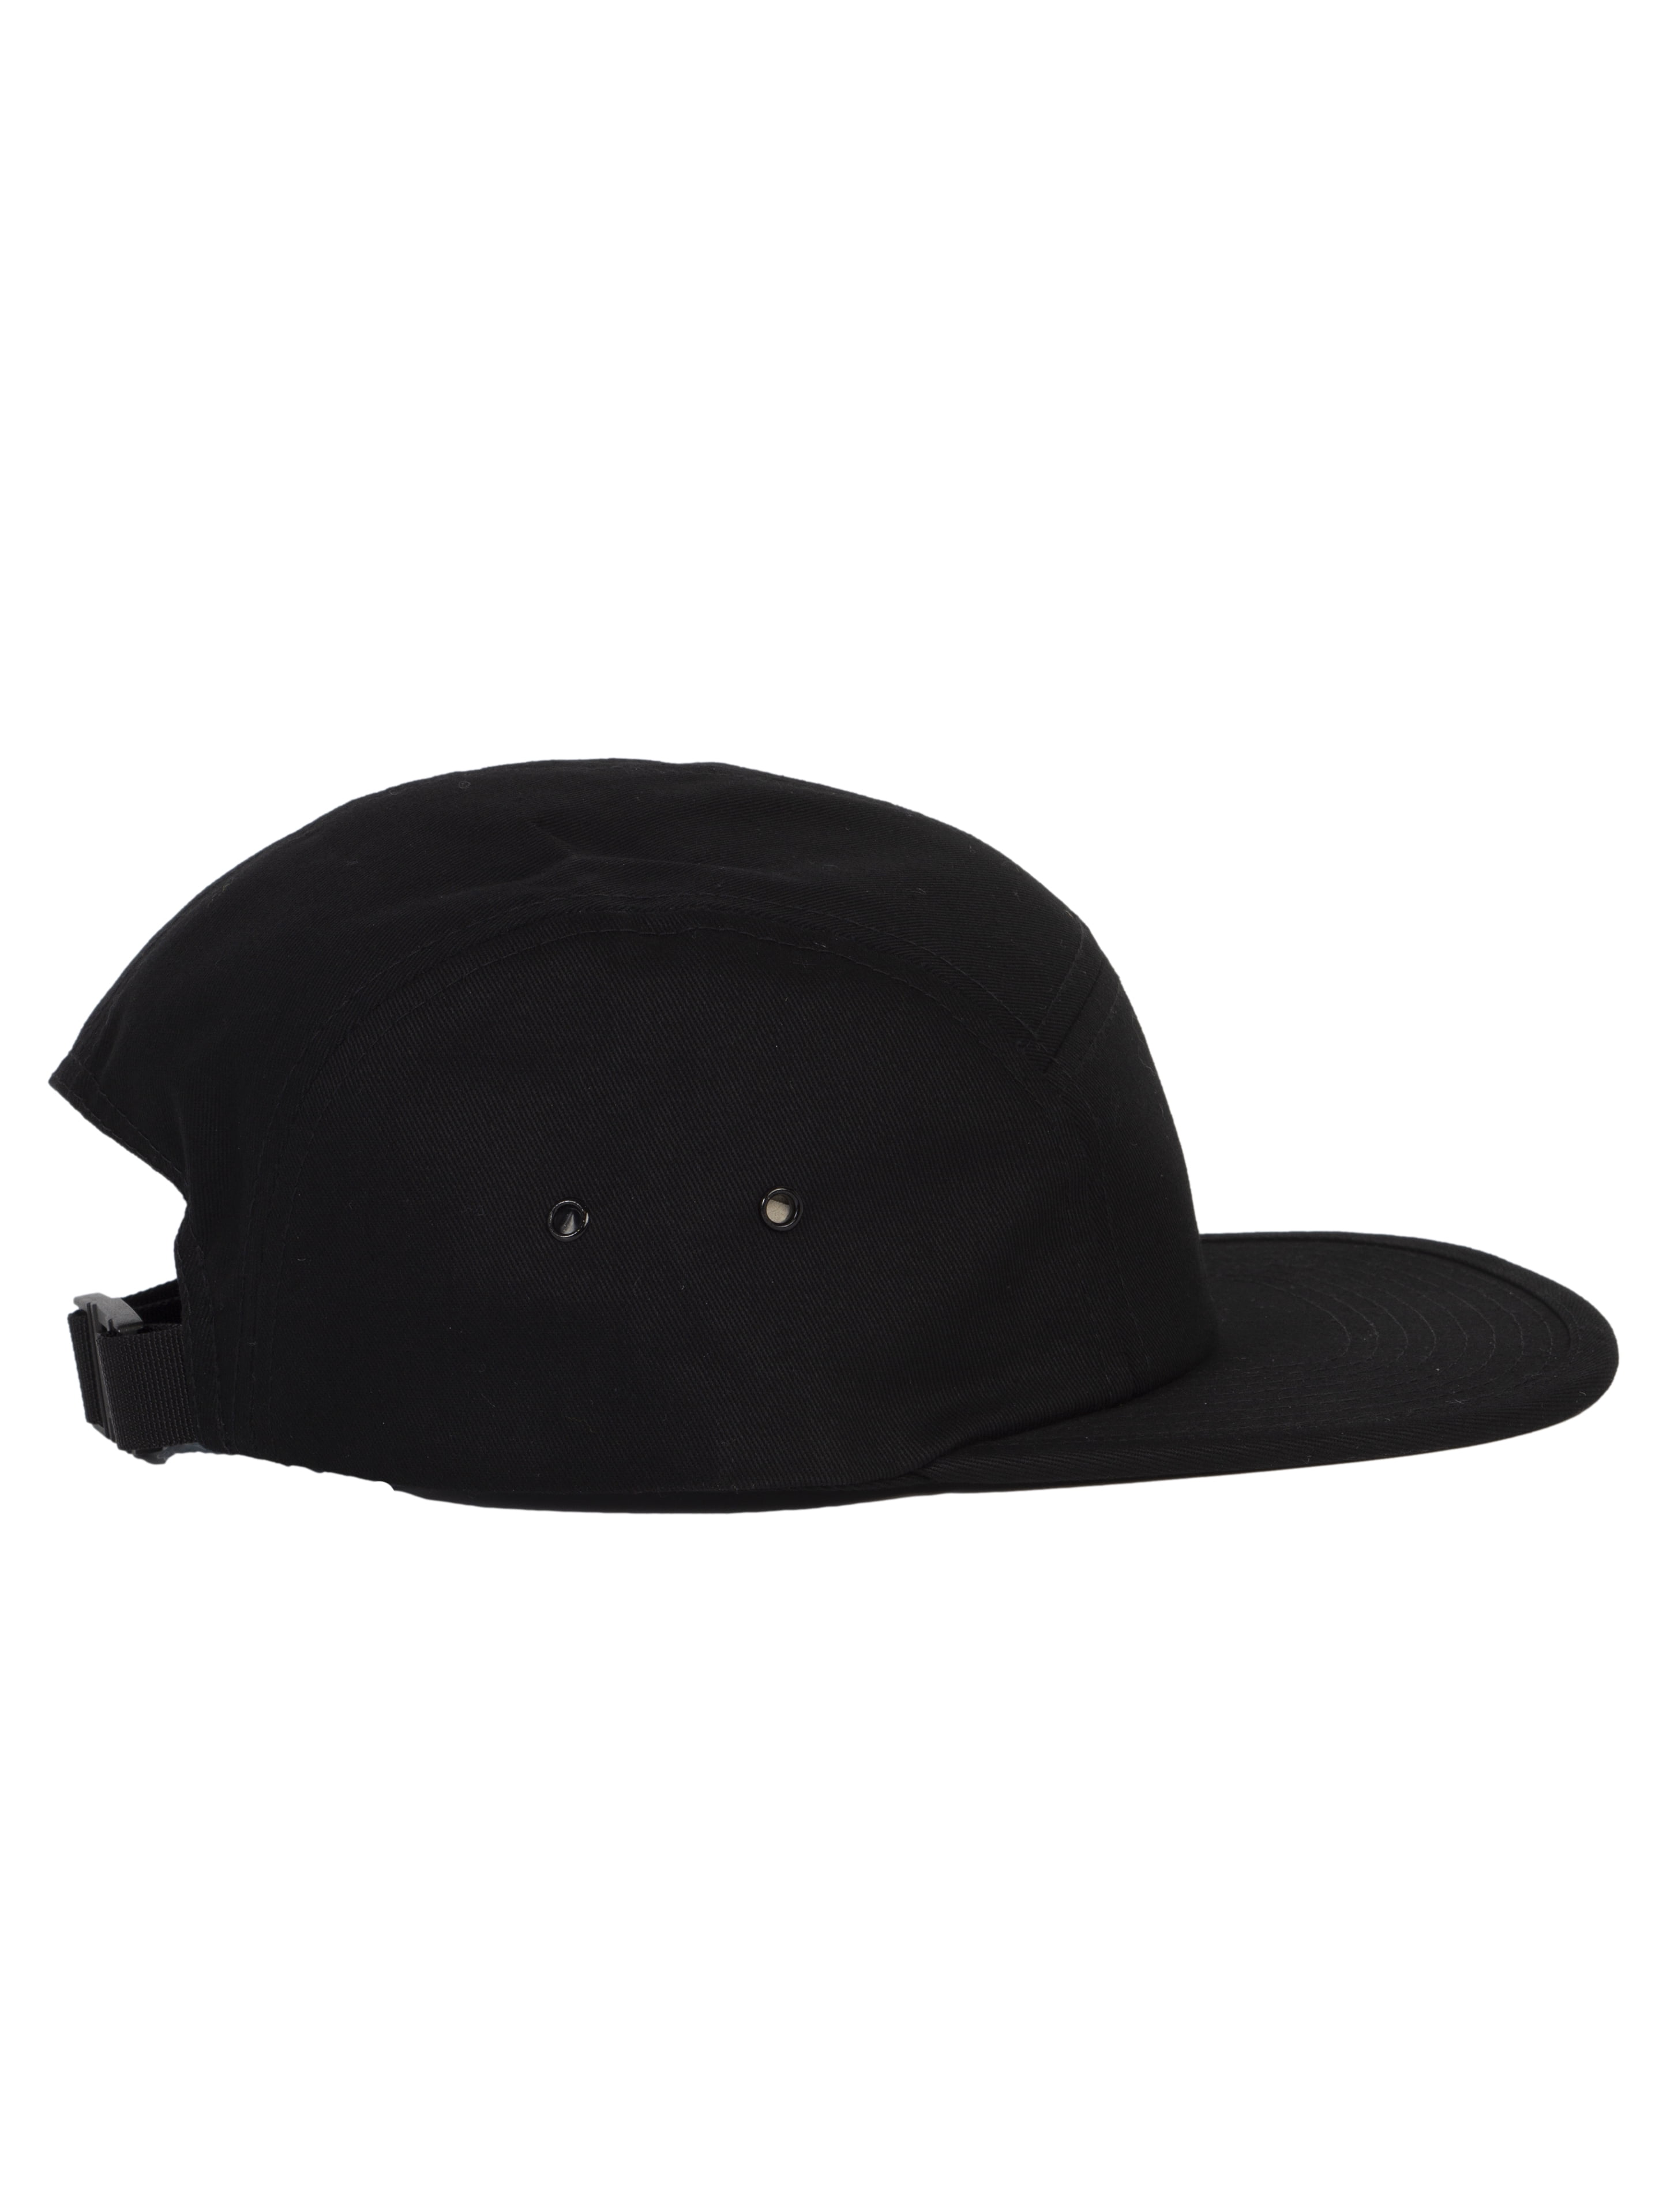 Top Headwear 5 Panel Hat For Men Classic Flat Bill Jockey Baseball Cap Black | Flex Caps